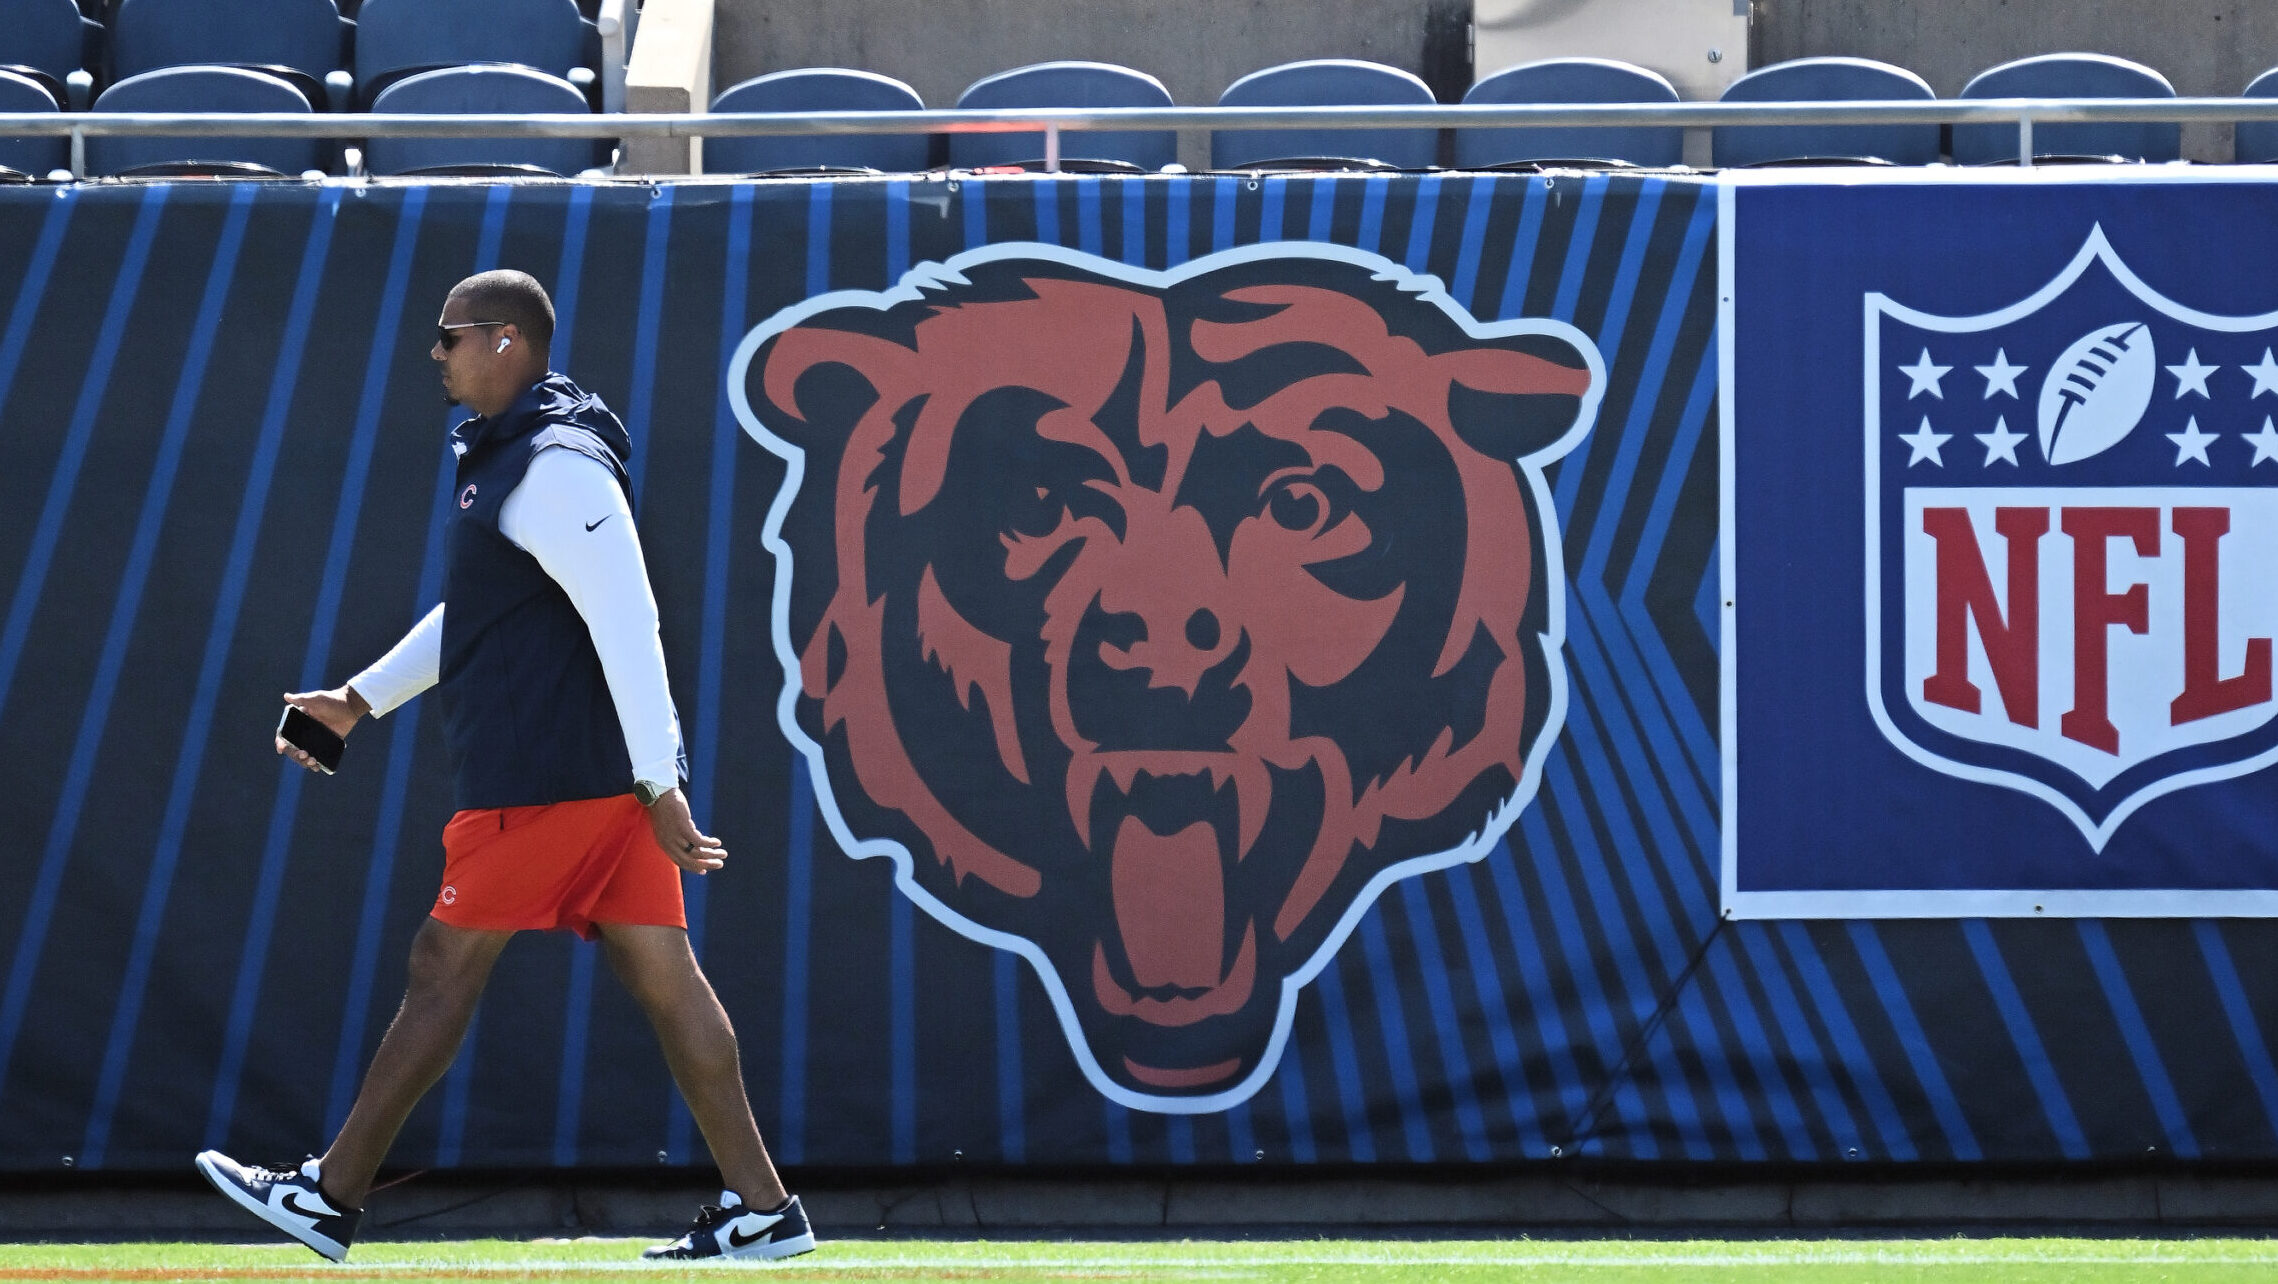 Bears GM Ryan Poles walks by the Bears logo on the field